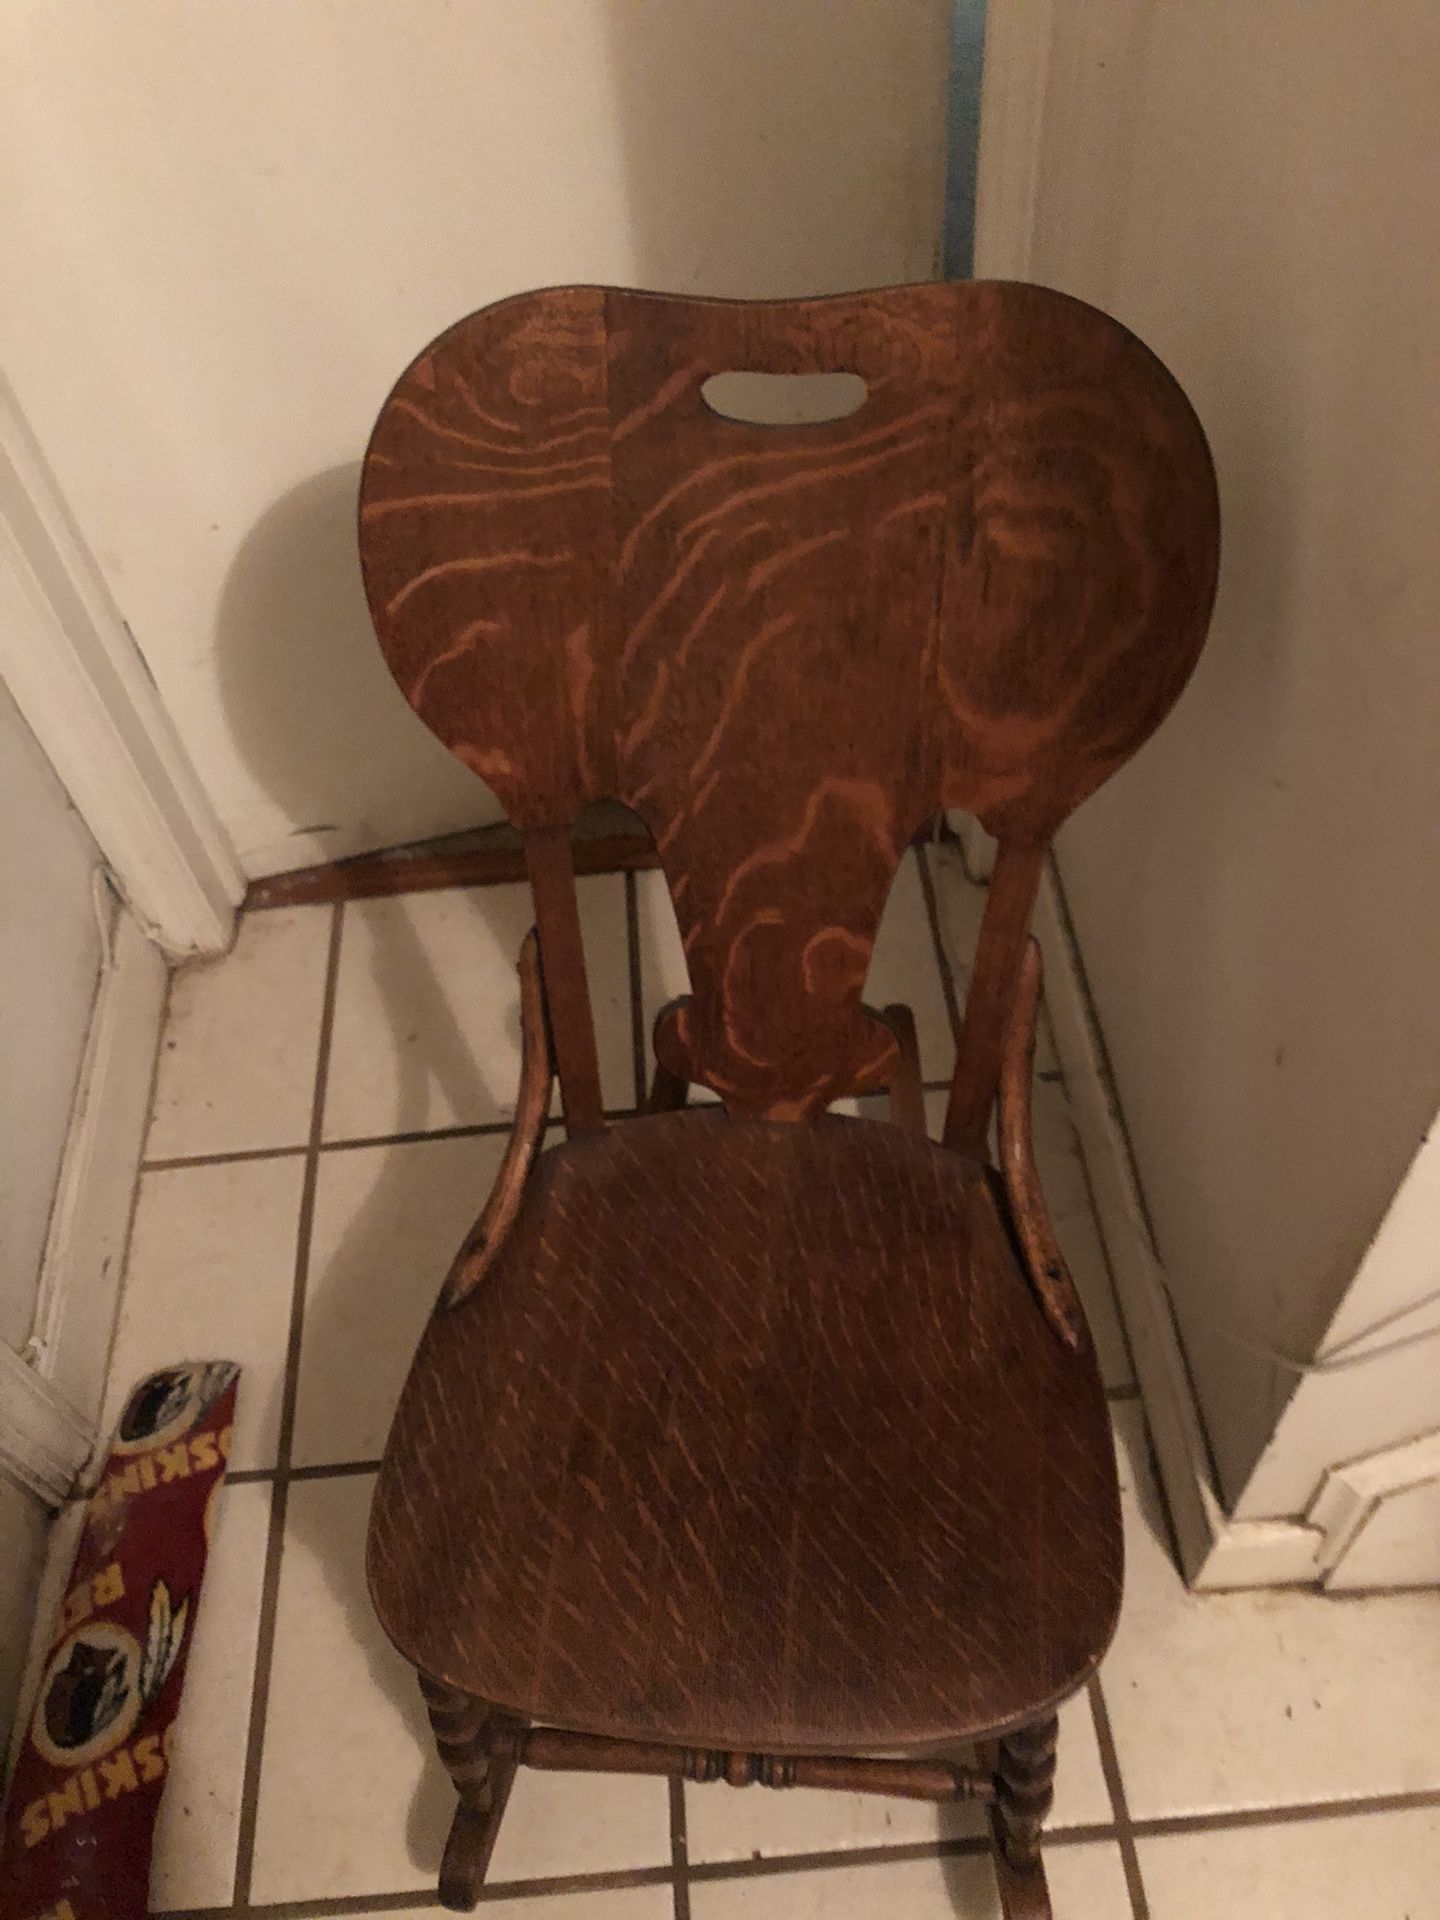 Antique Rocking Chair